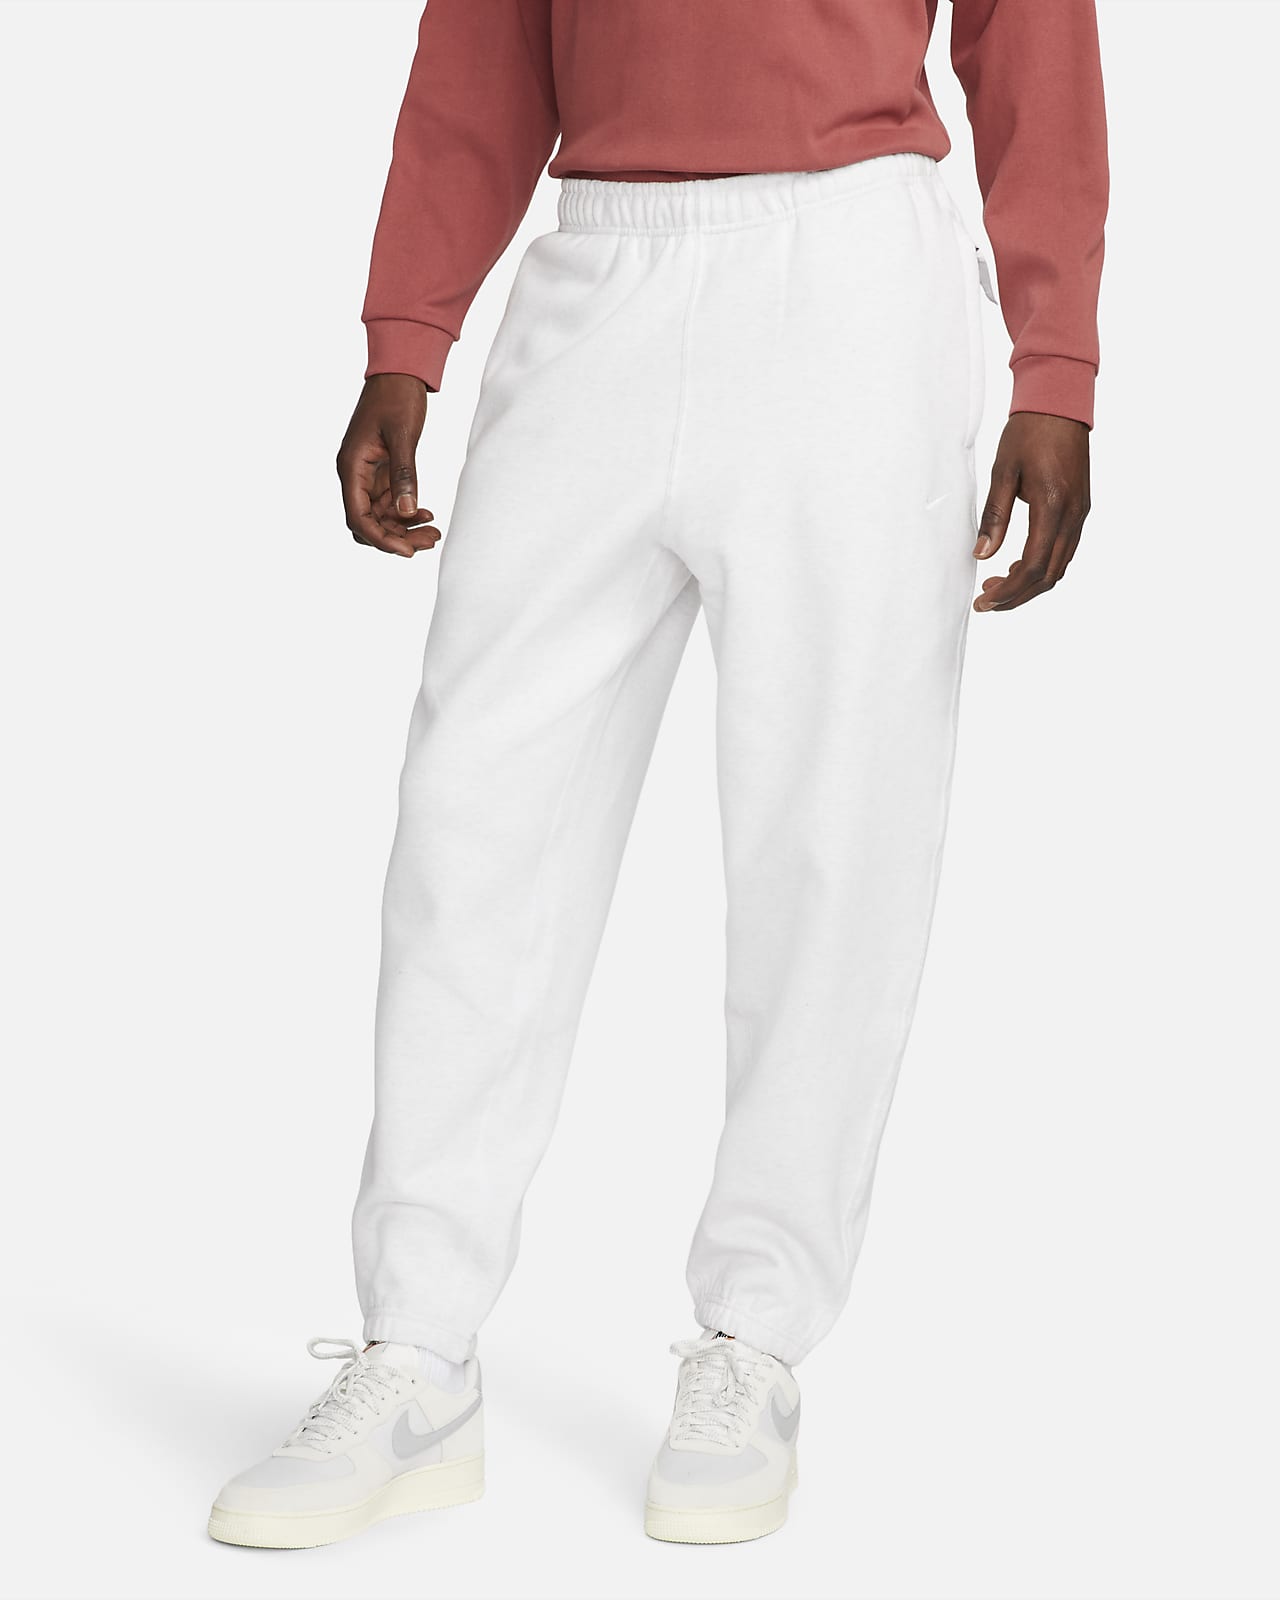 Nike Solo Swoosh Pantalón de tejido Fleece - Hombre